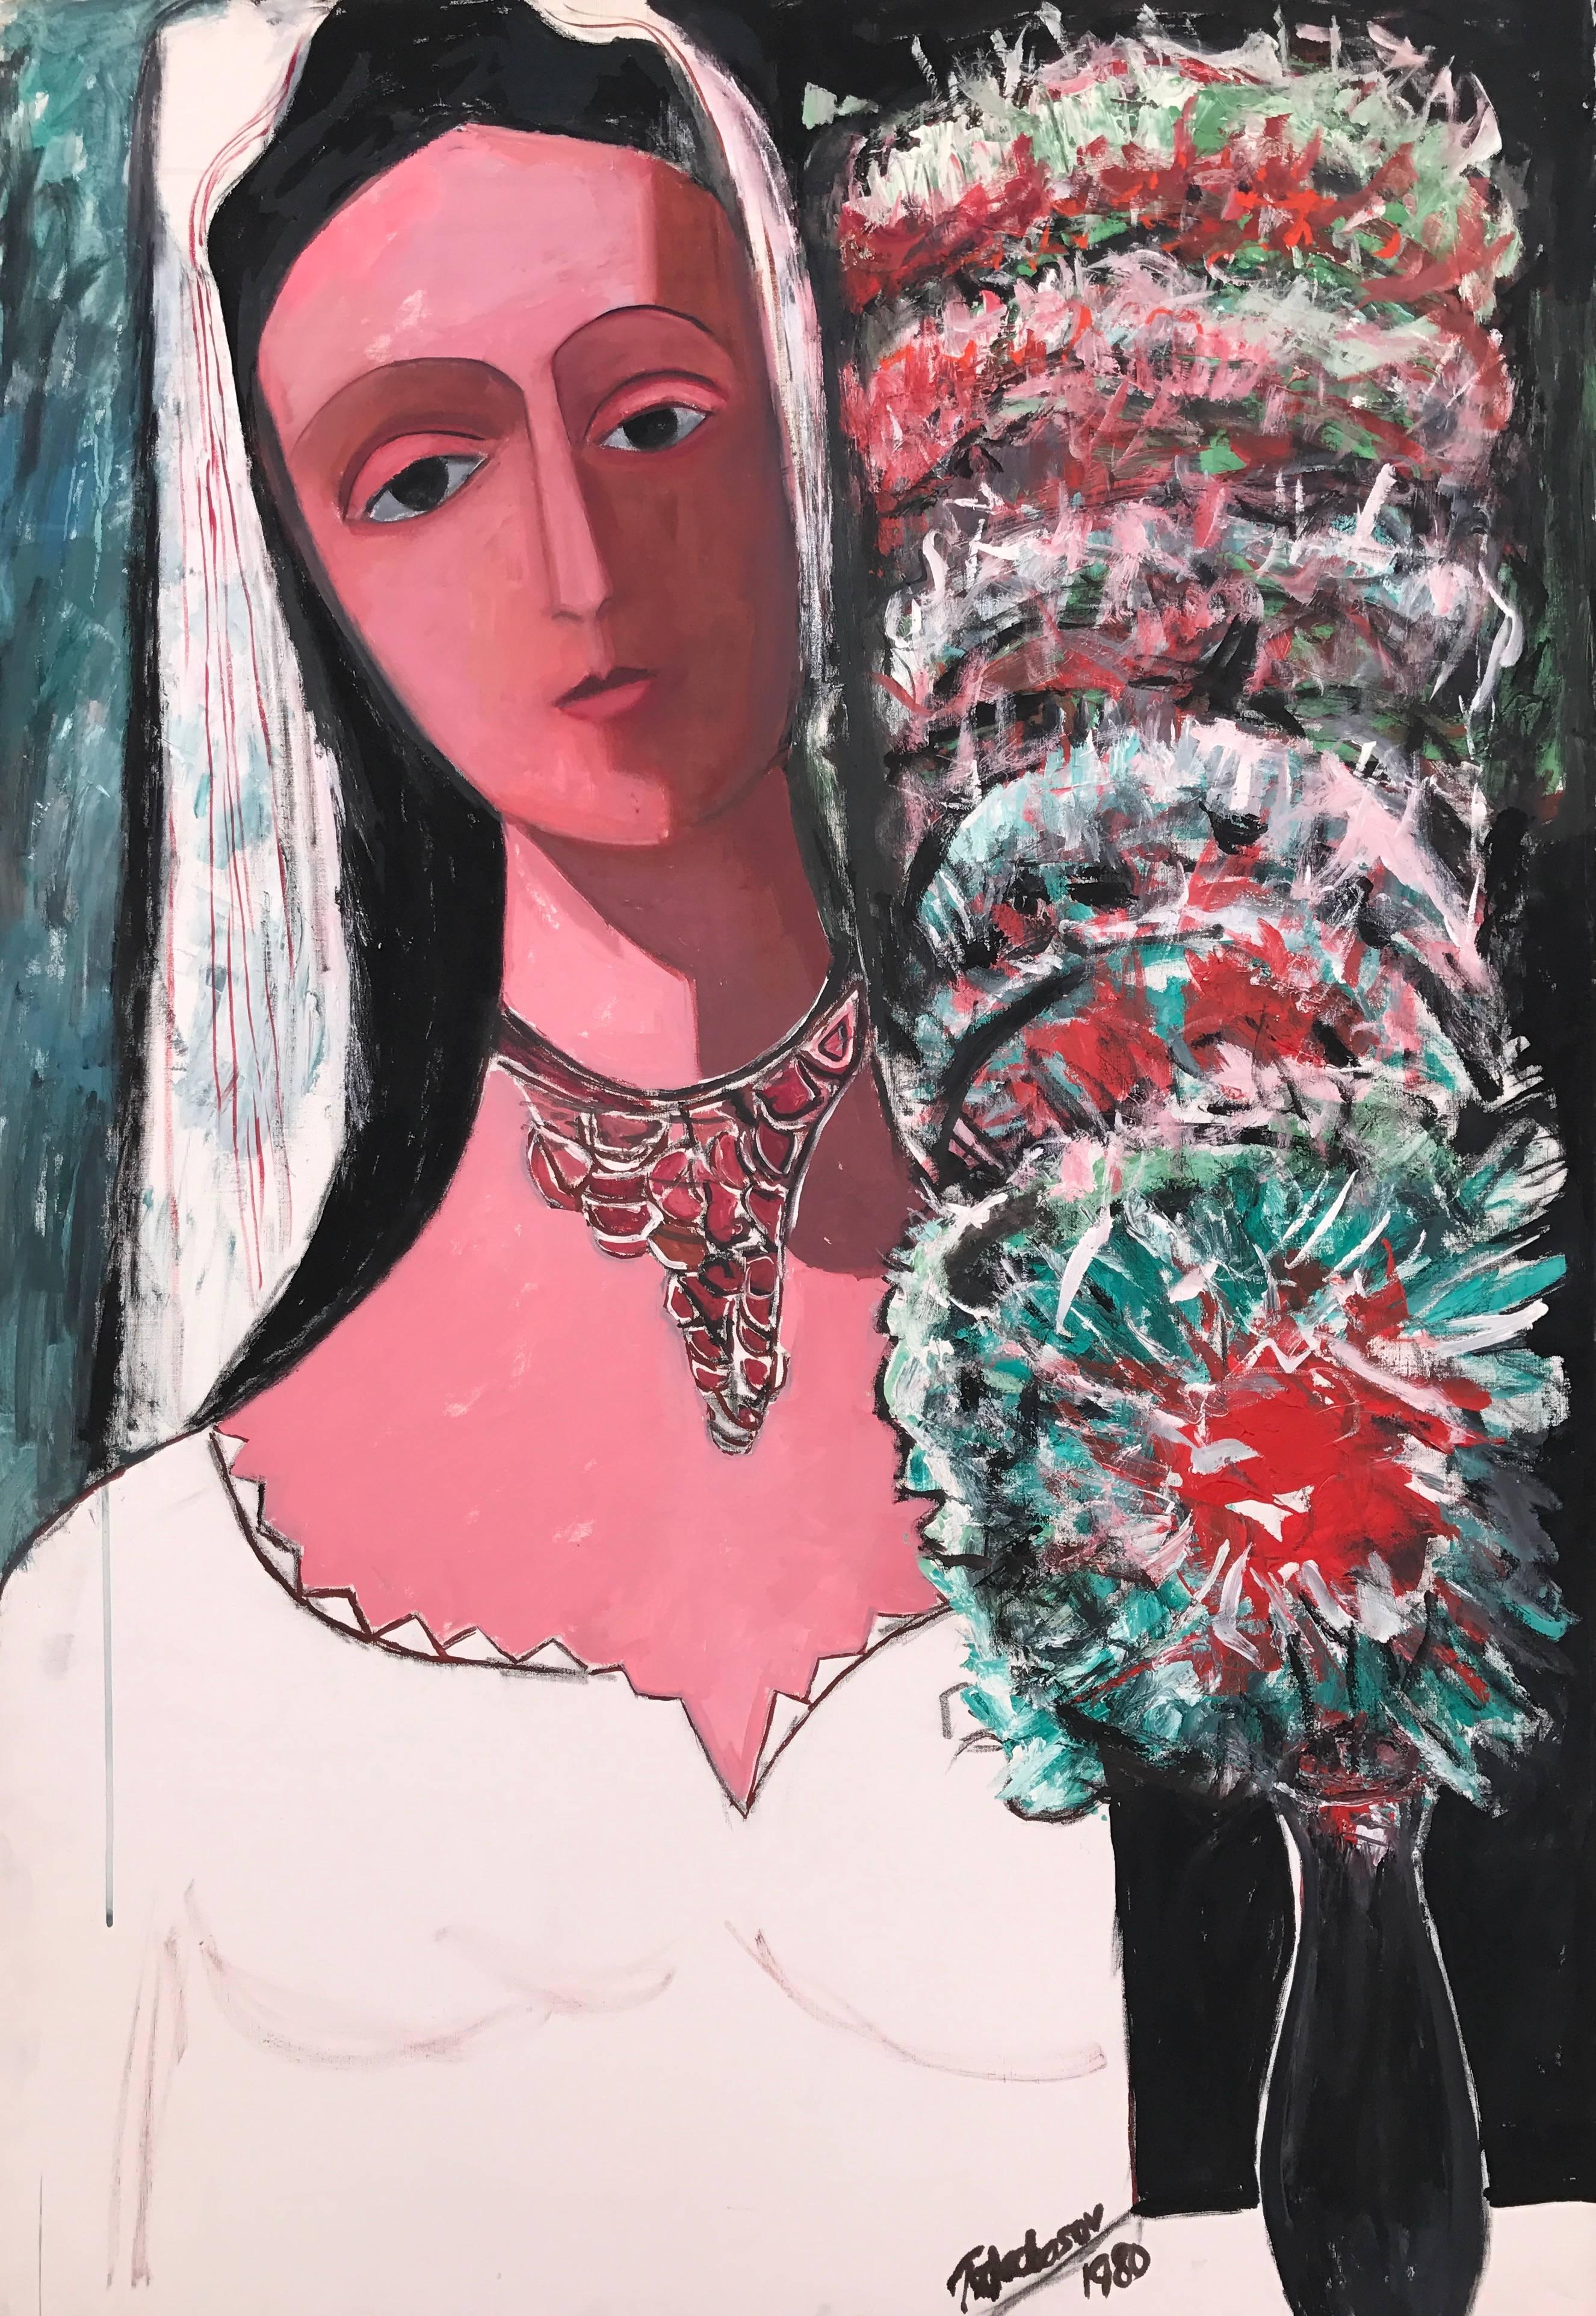 Nahum Tschacbasov Figurative Painting - "The Bride"